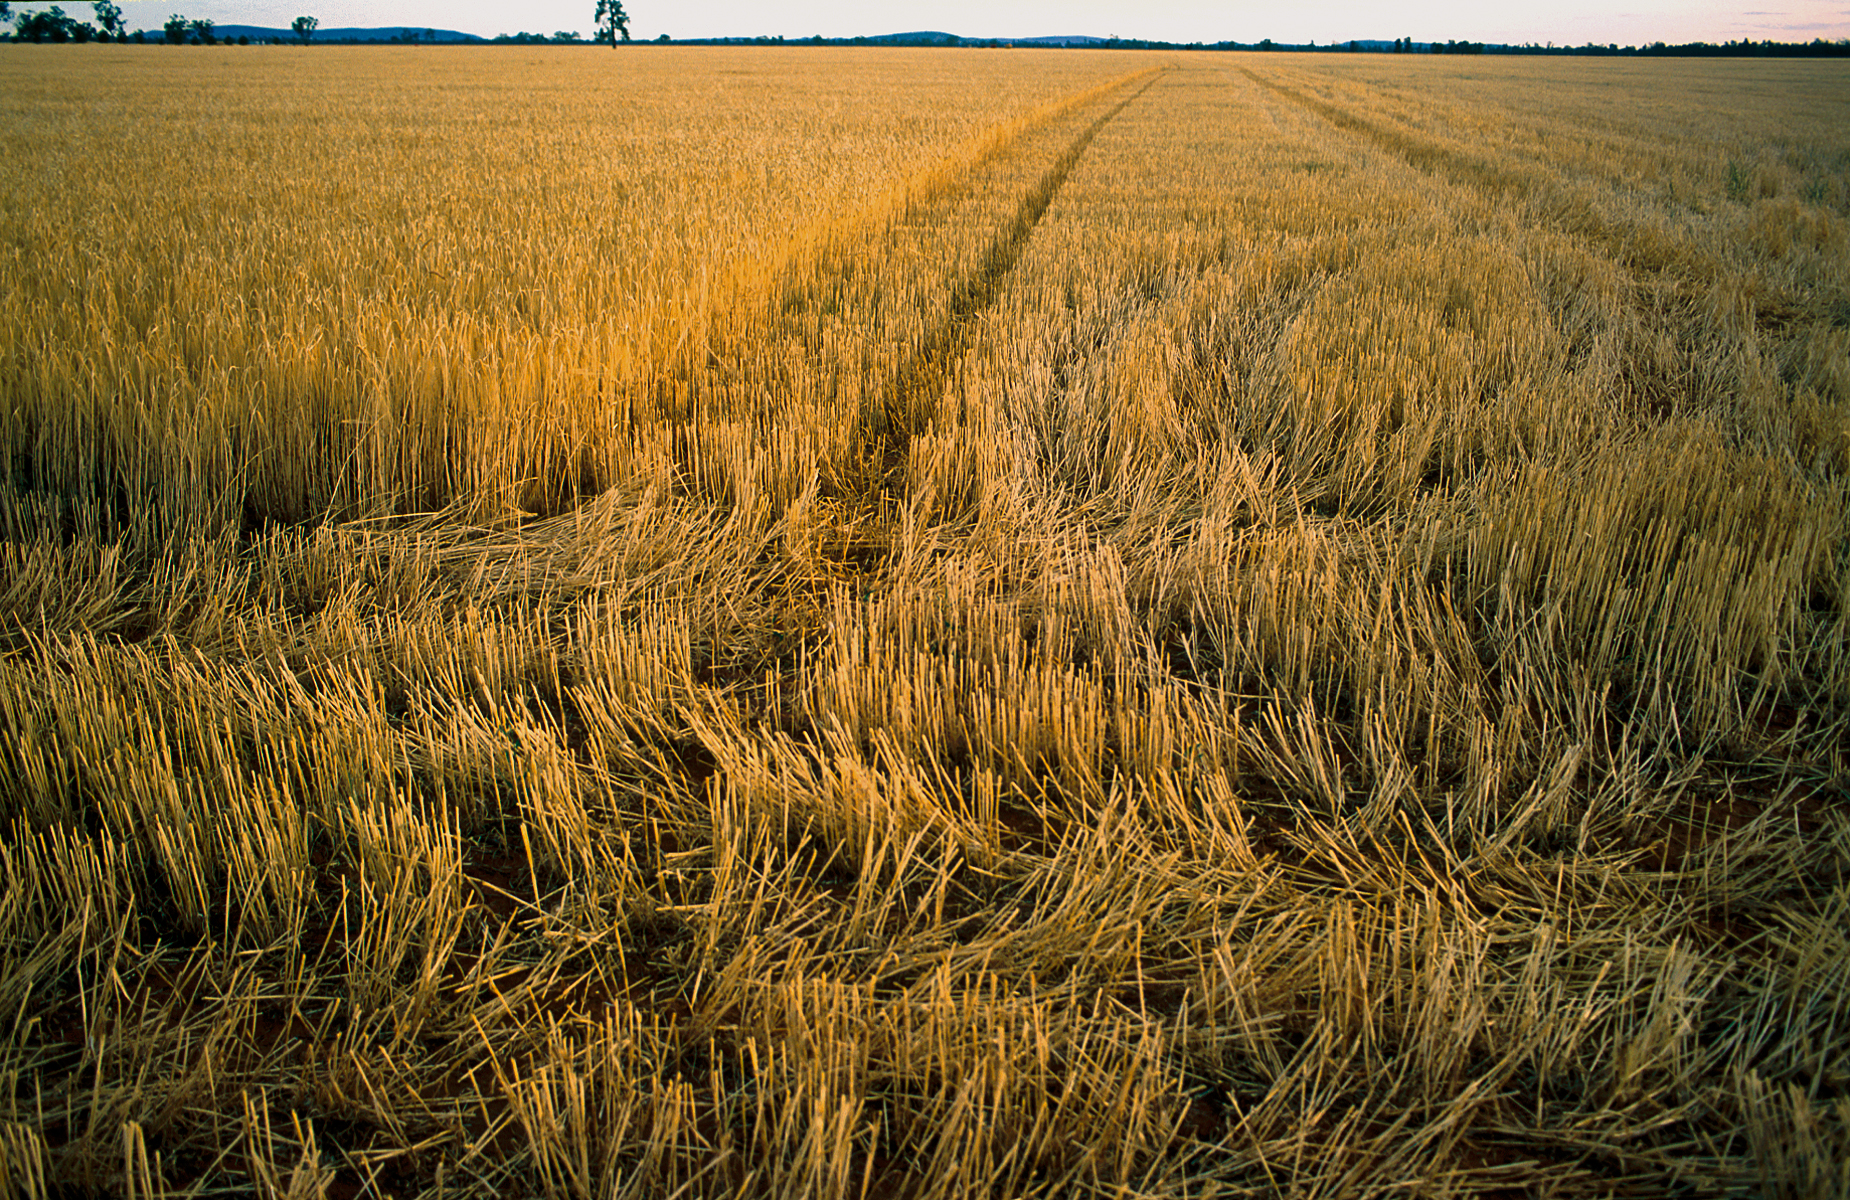 Wheat stubble near Ardlethan, NSW. (Source: Gregory Heath, 2002)